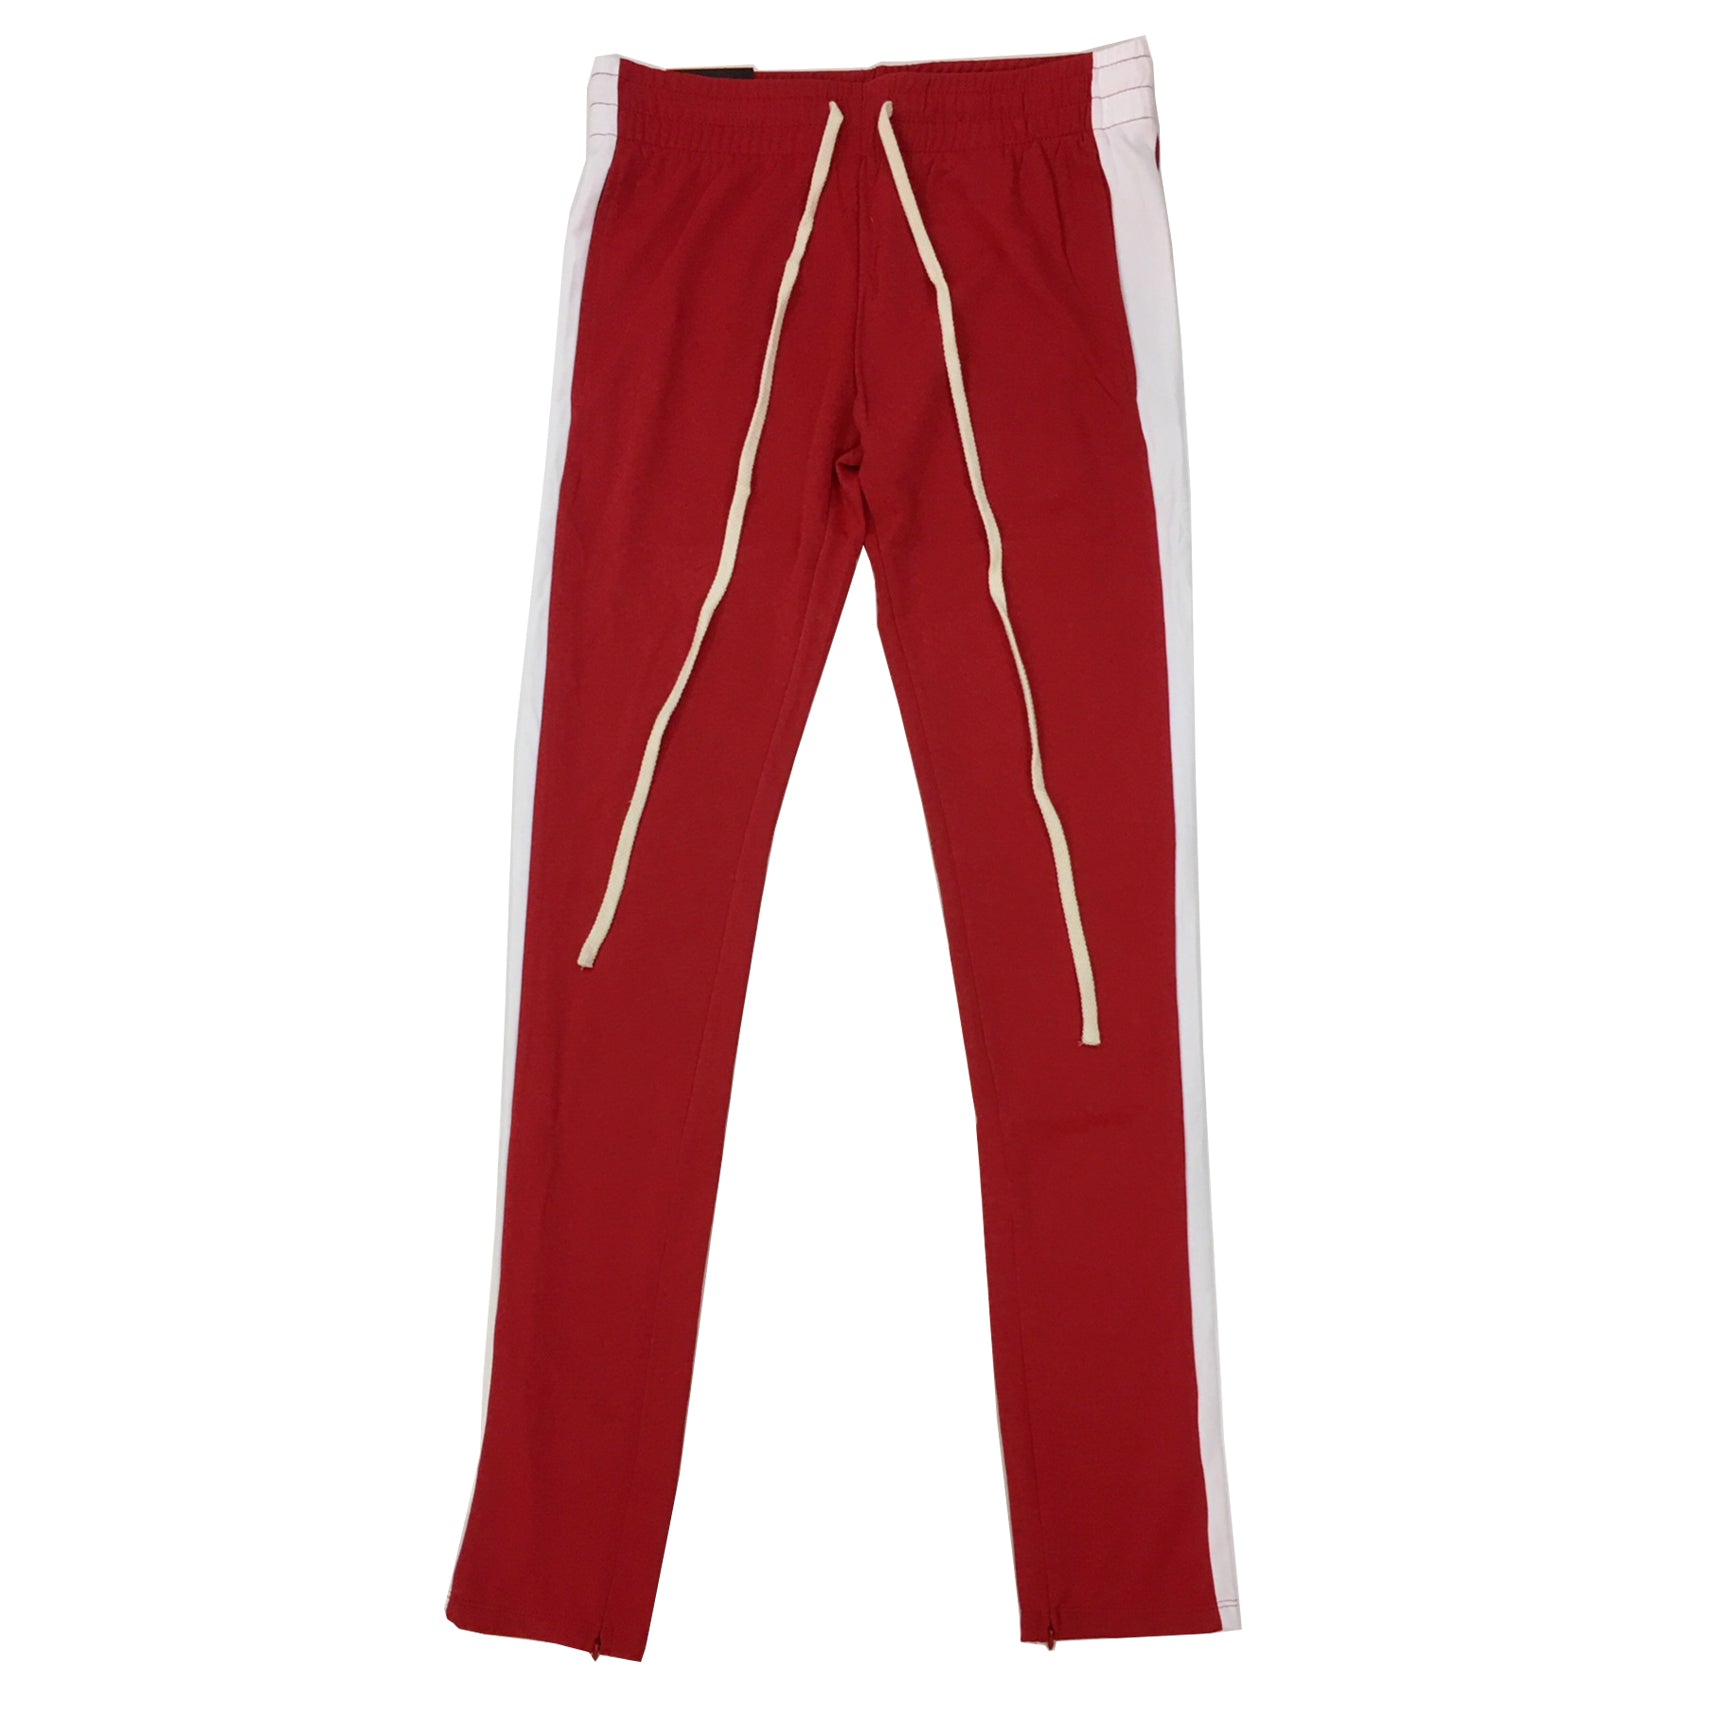 Royal Blue Single Strip Track Pant (Red/White)